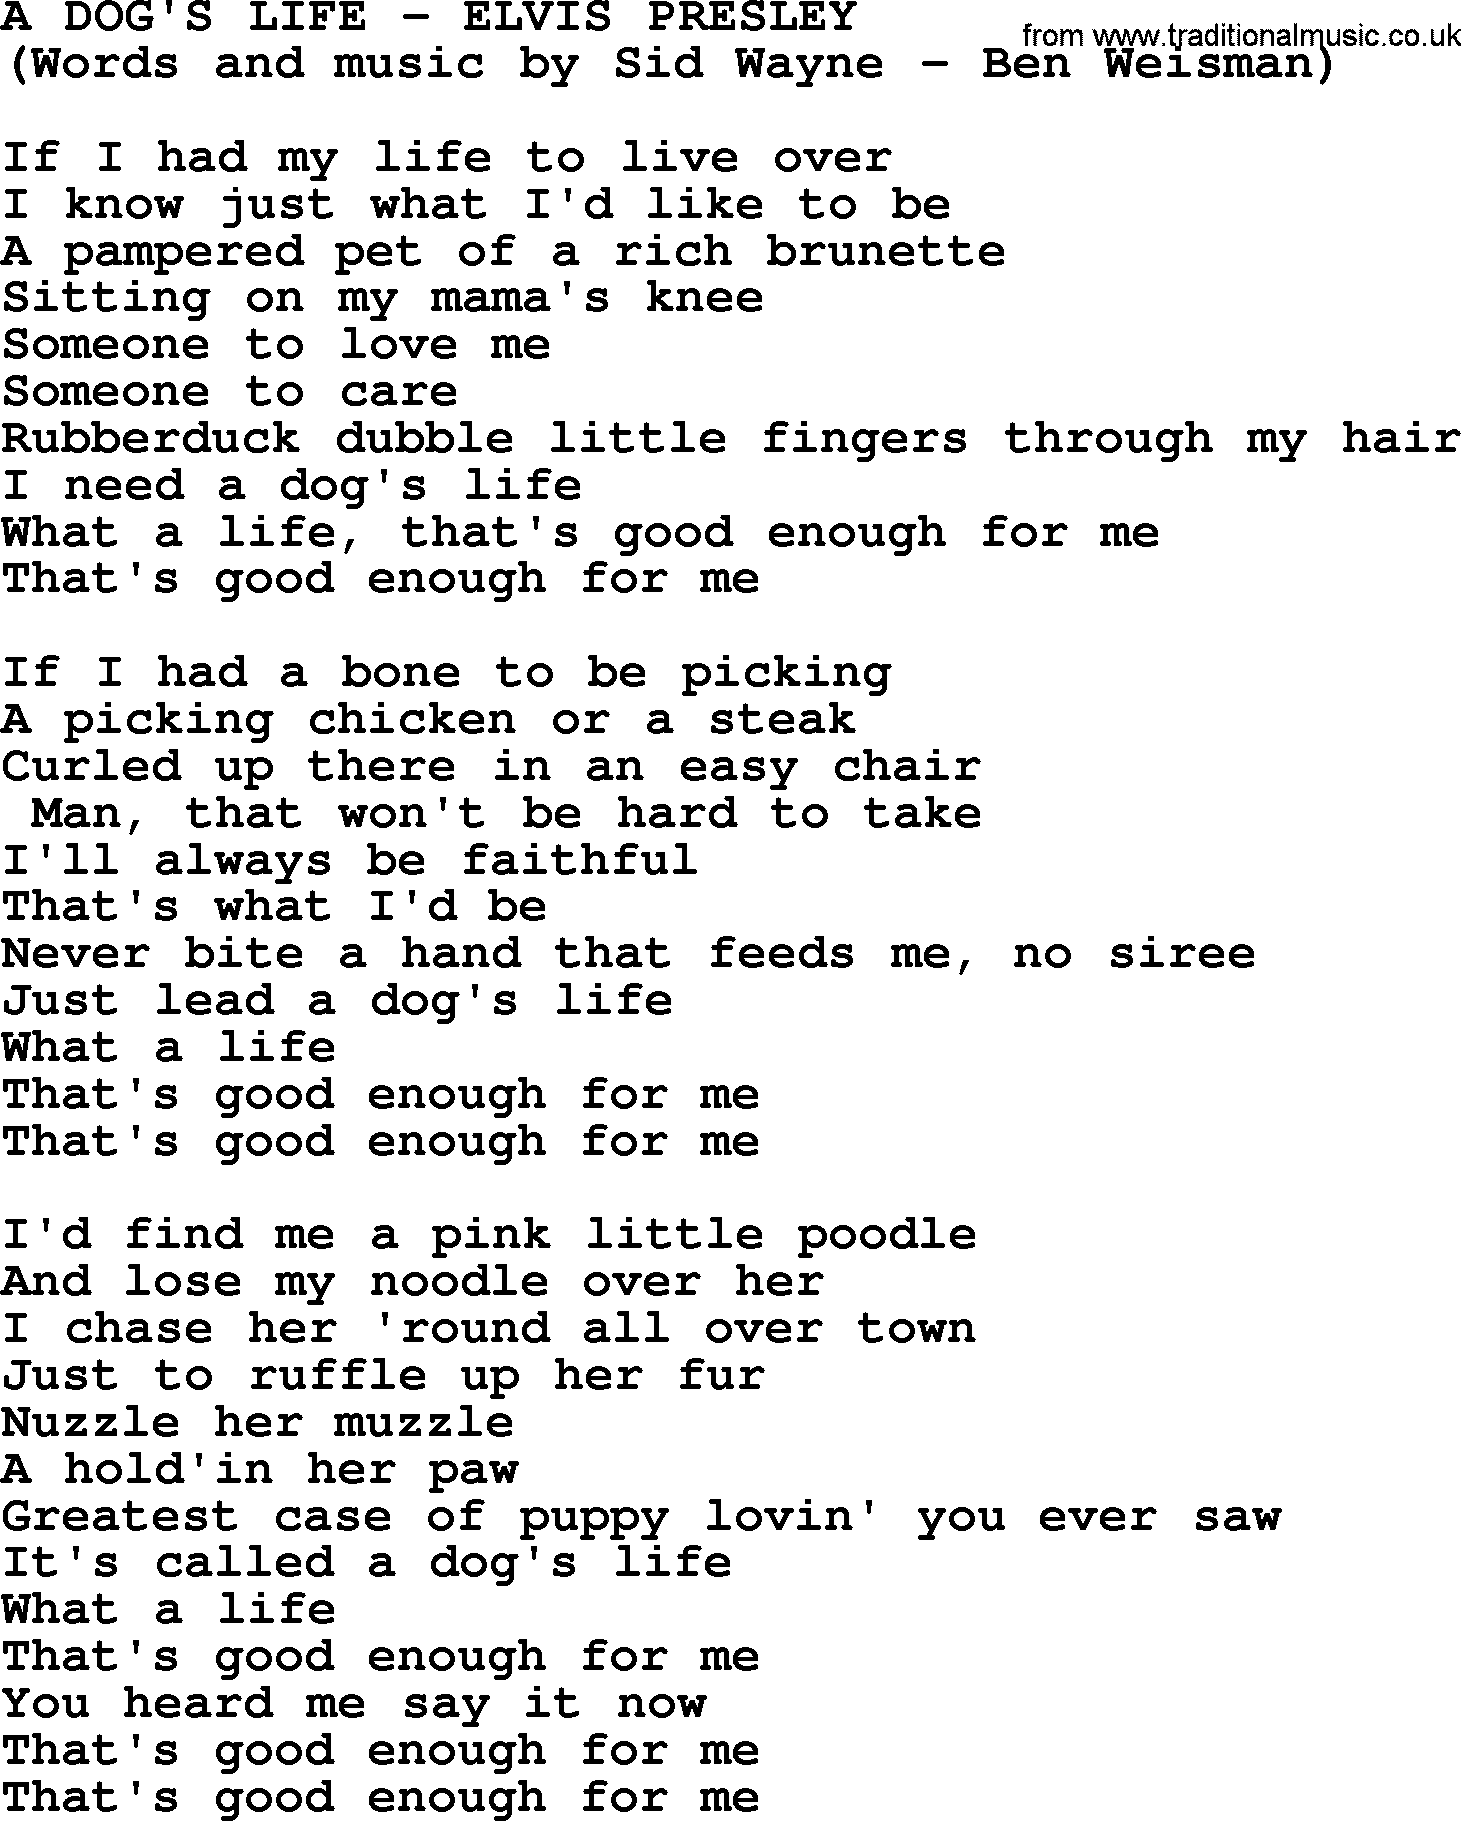 Elvis Presley song: A Dog's Life lyrics